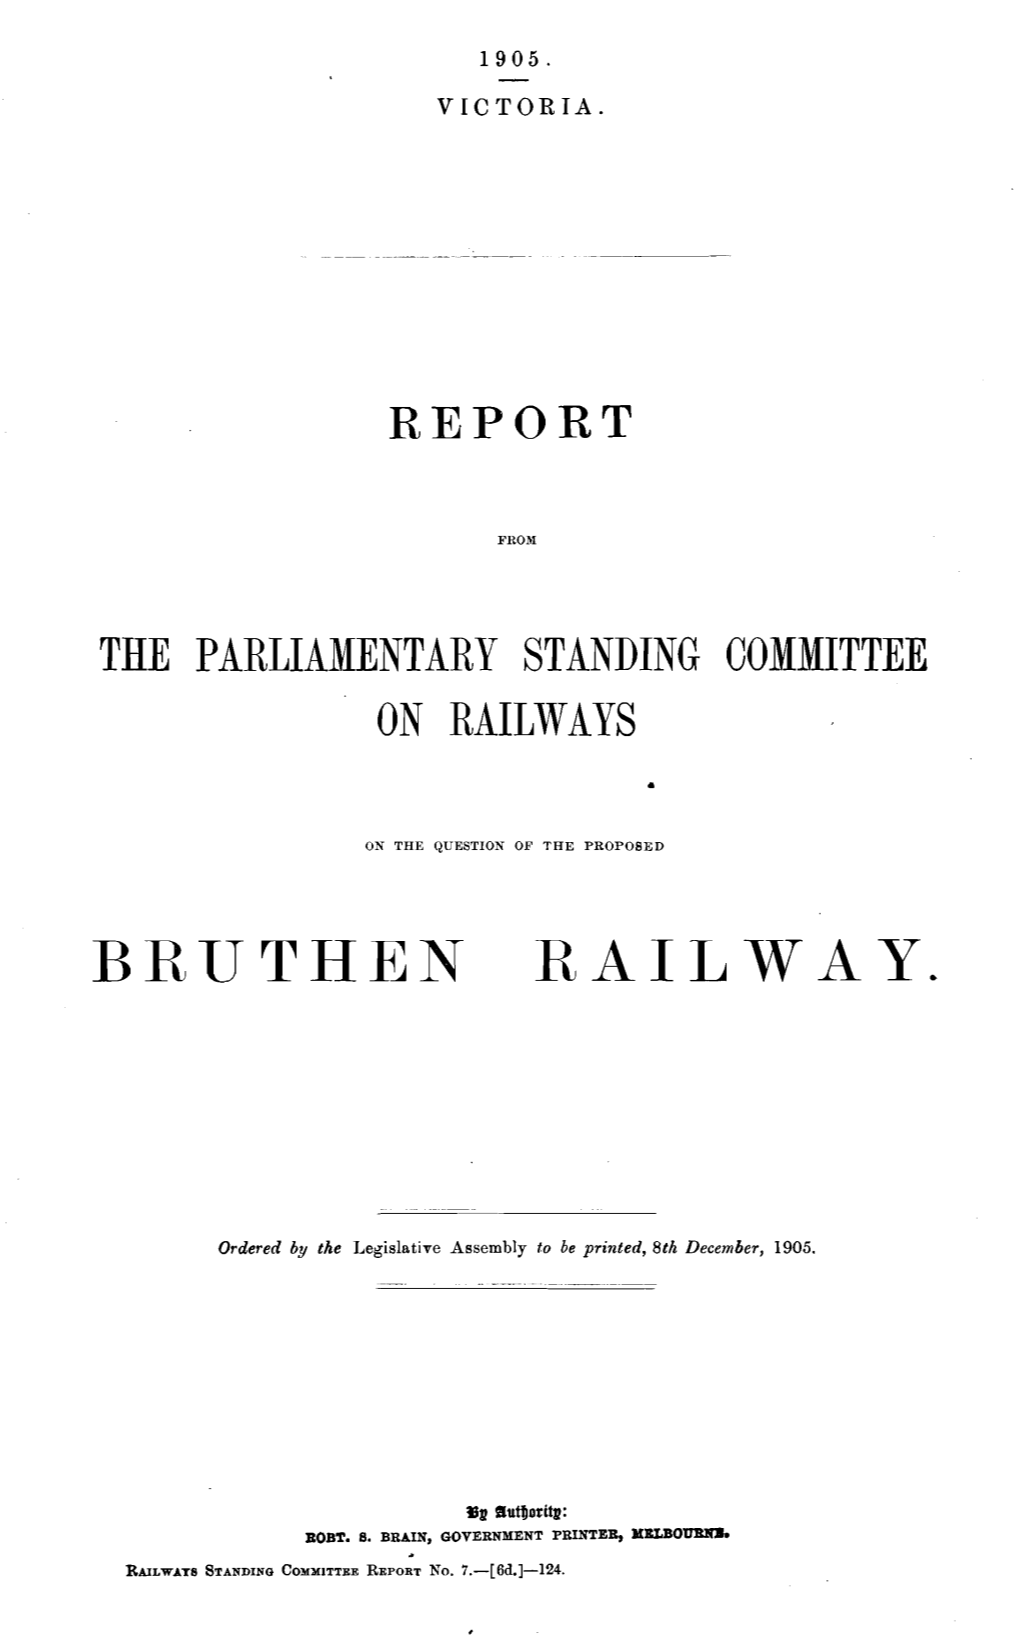 Bruthen Railway